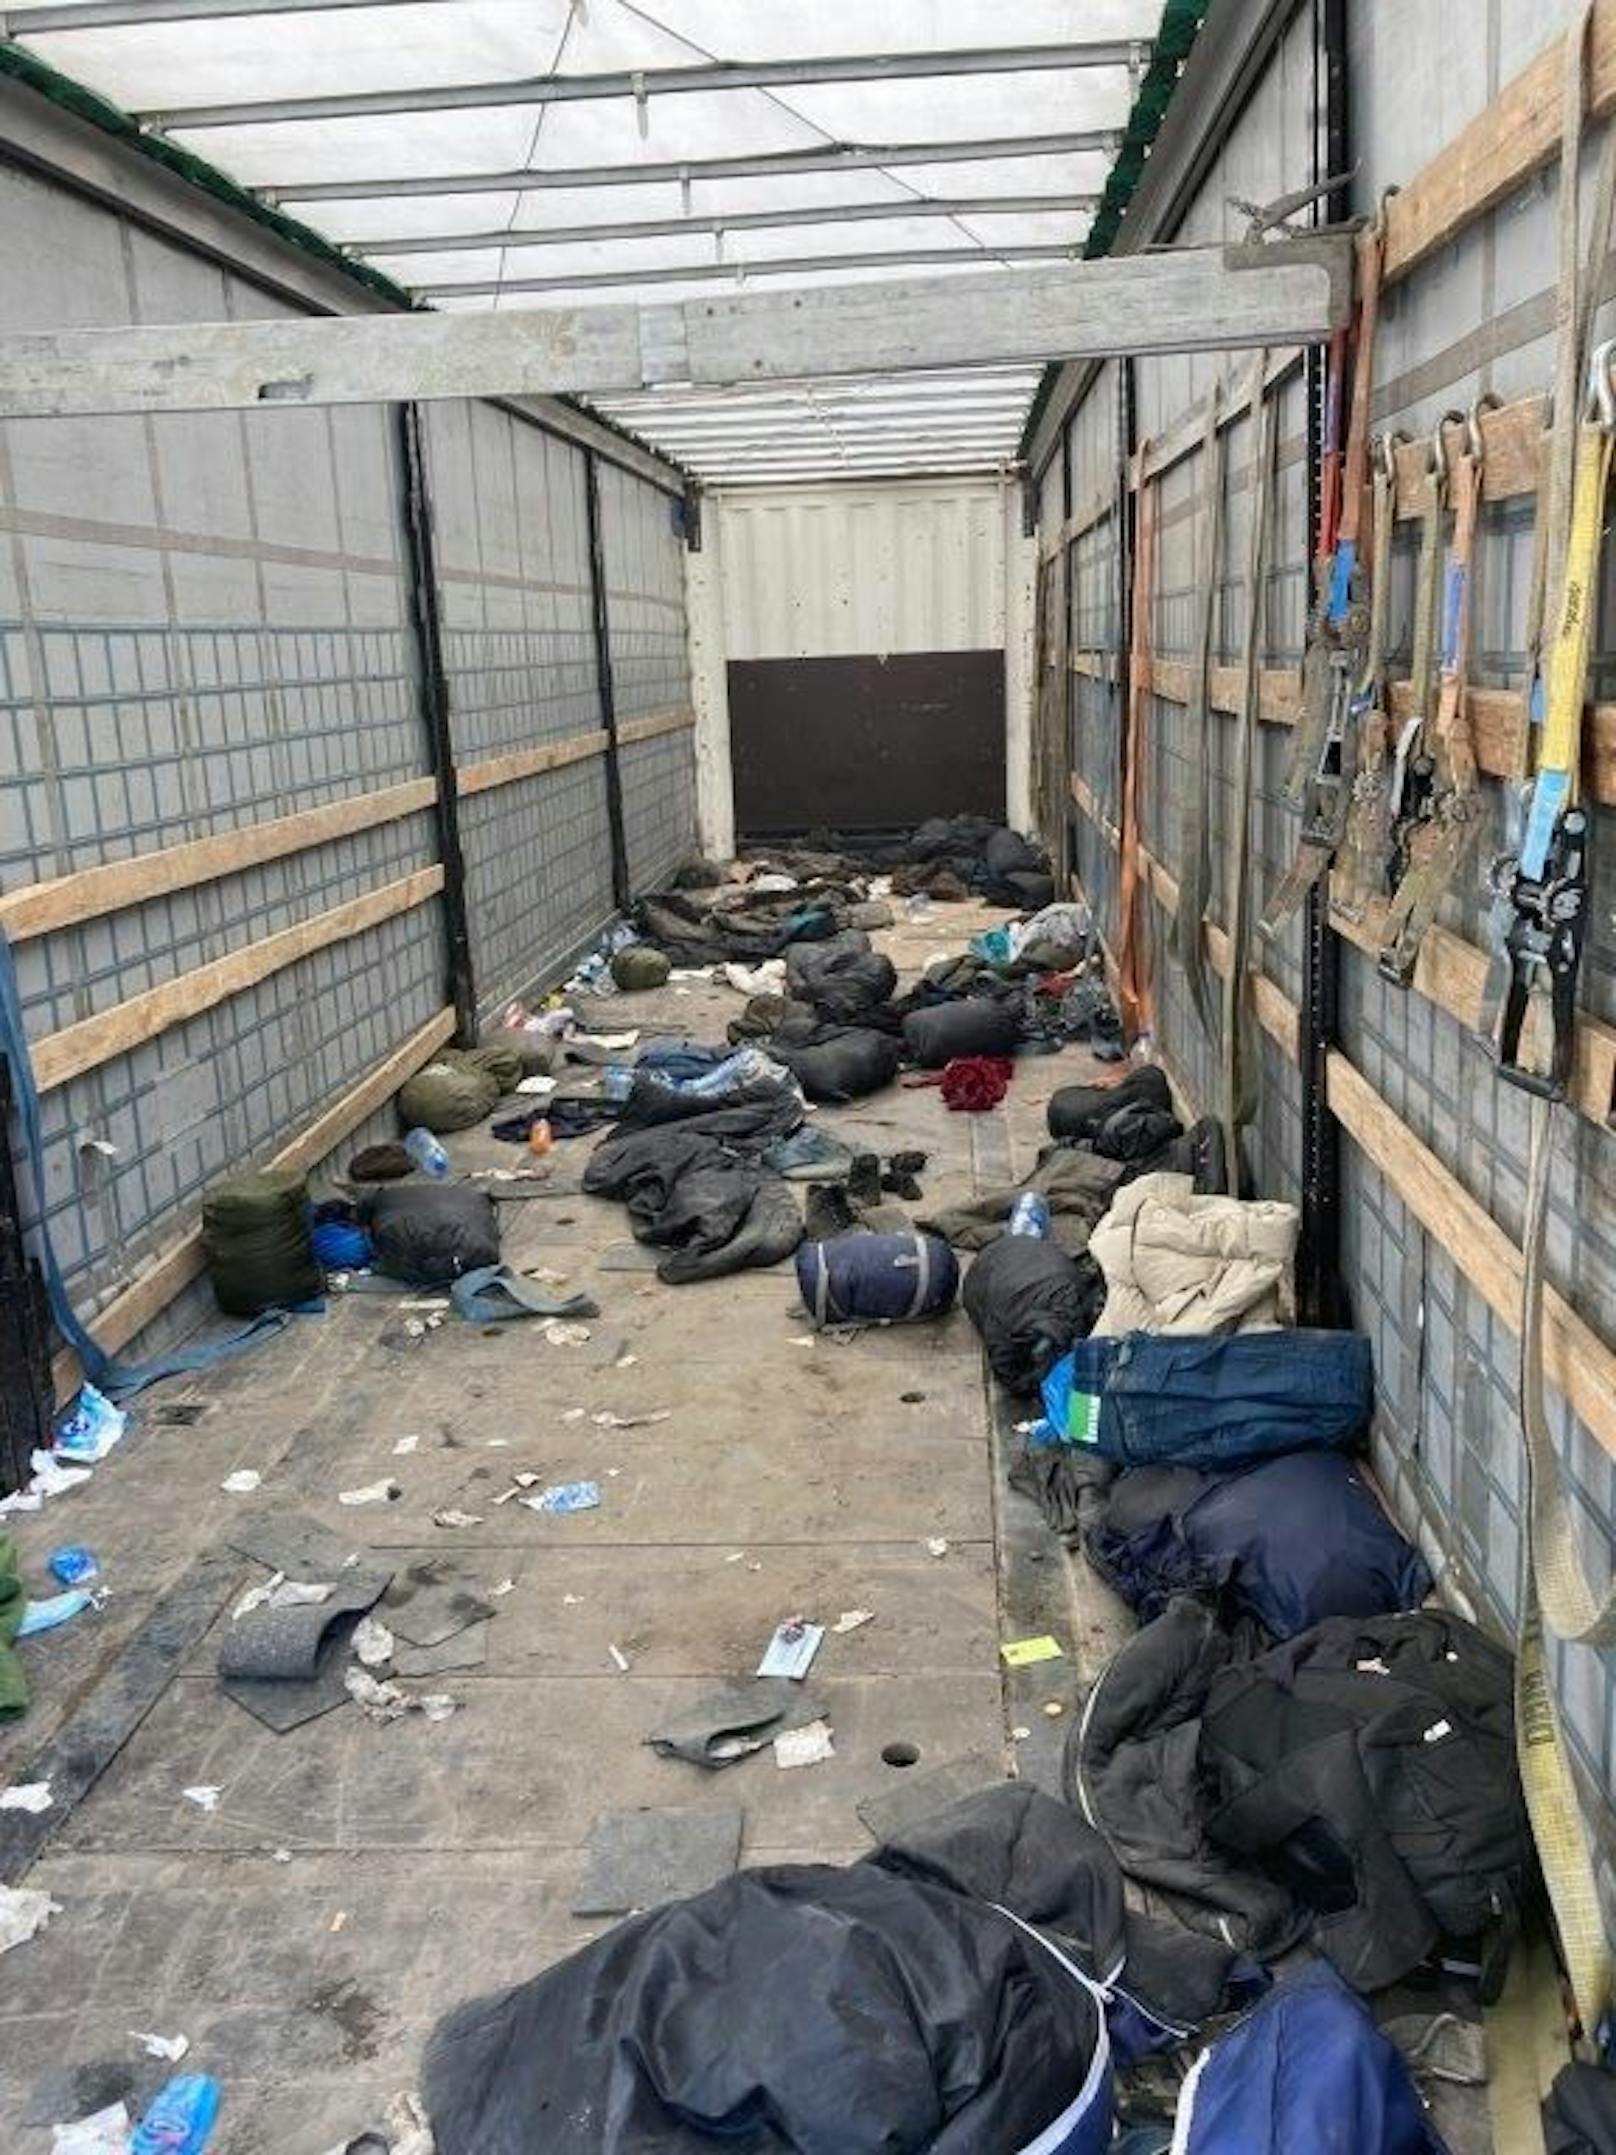 54 Migranten in Lkw gepfercht, Schlepper in Haft